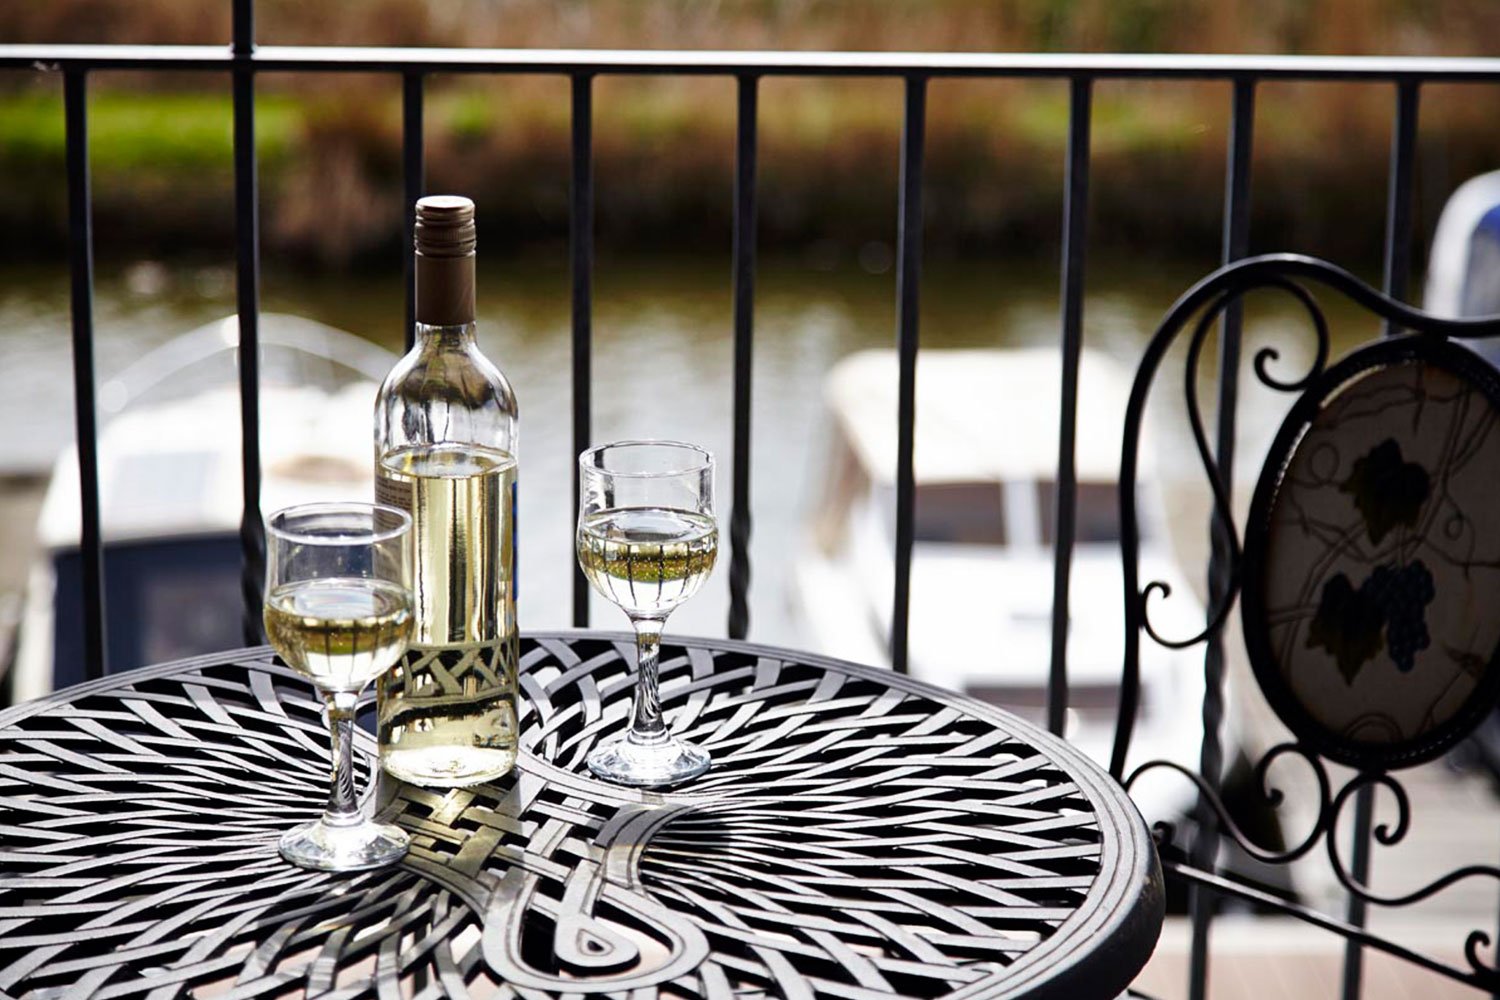 Waveney-River-Centre-wine-glasses-on-balcony.jpg